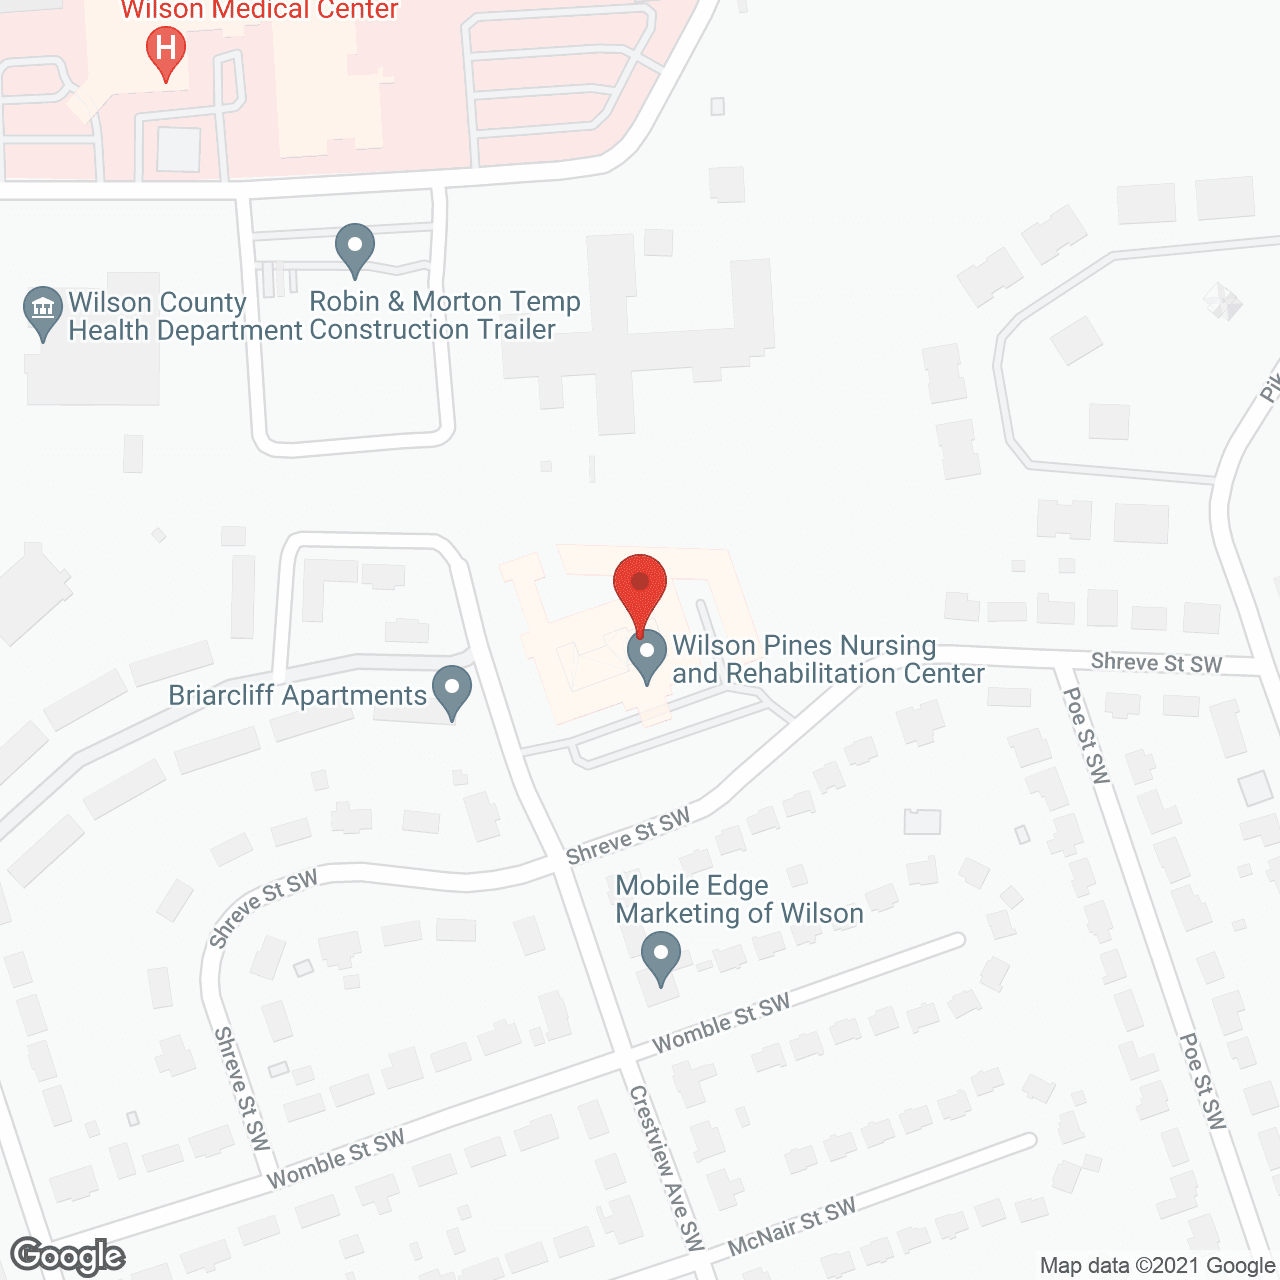 Wilson Pines Nursing and Rehabilitation Center in google map